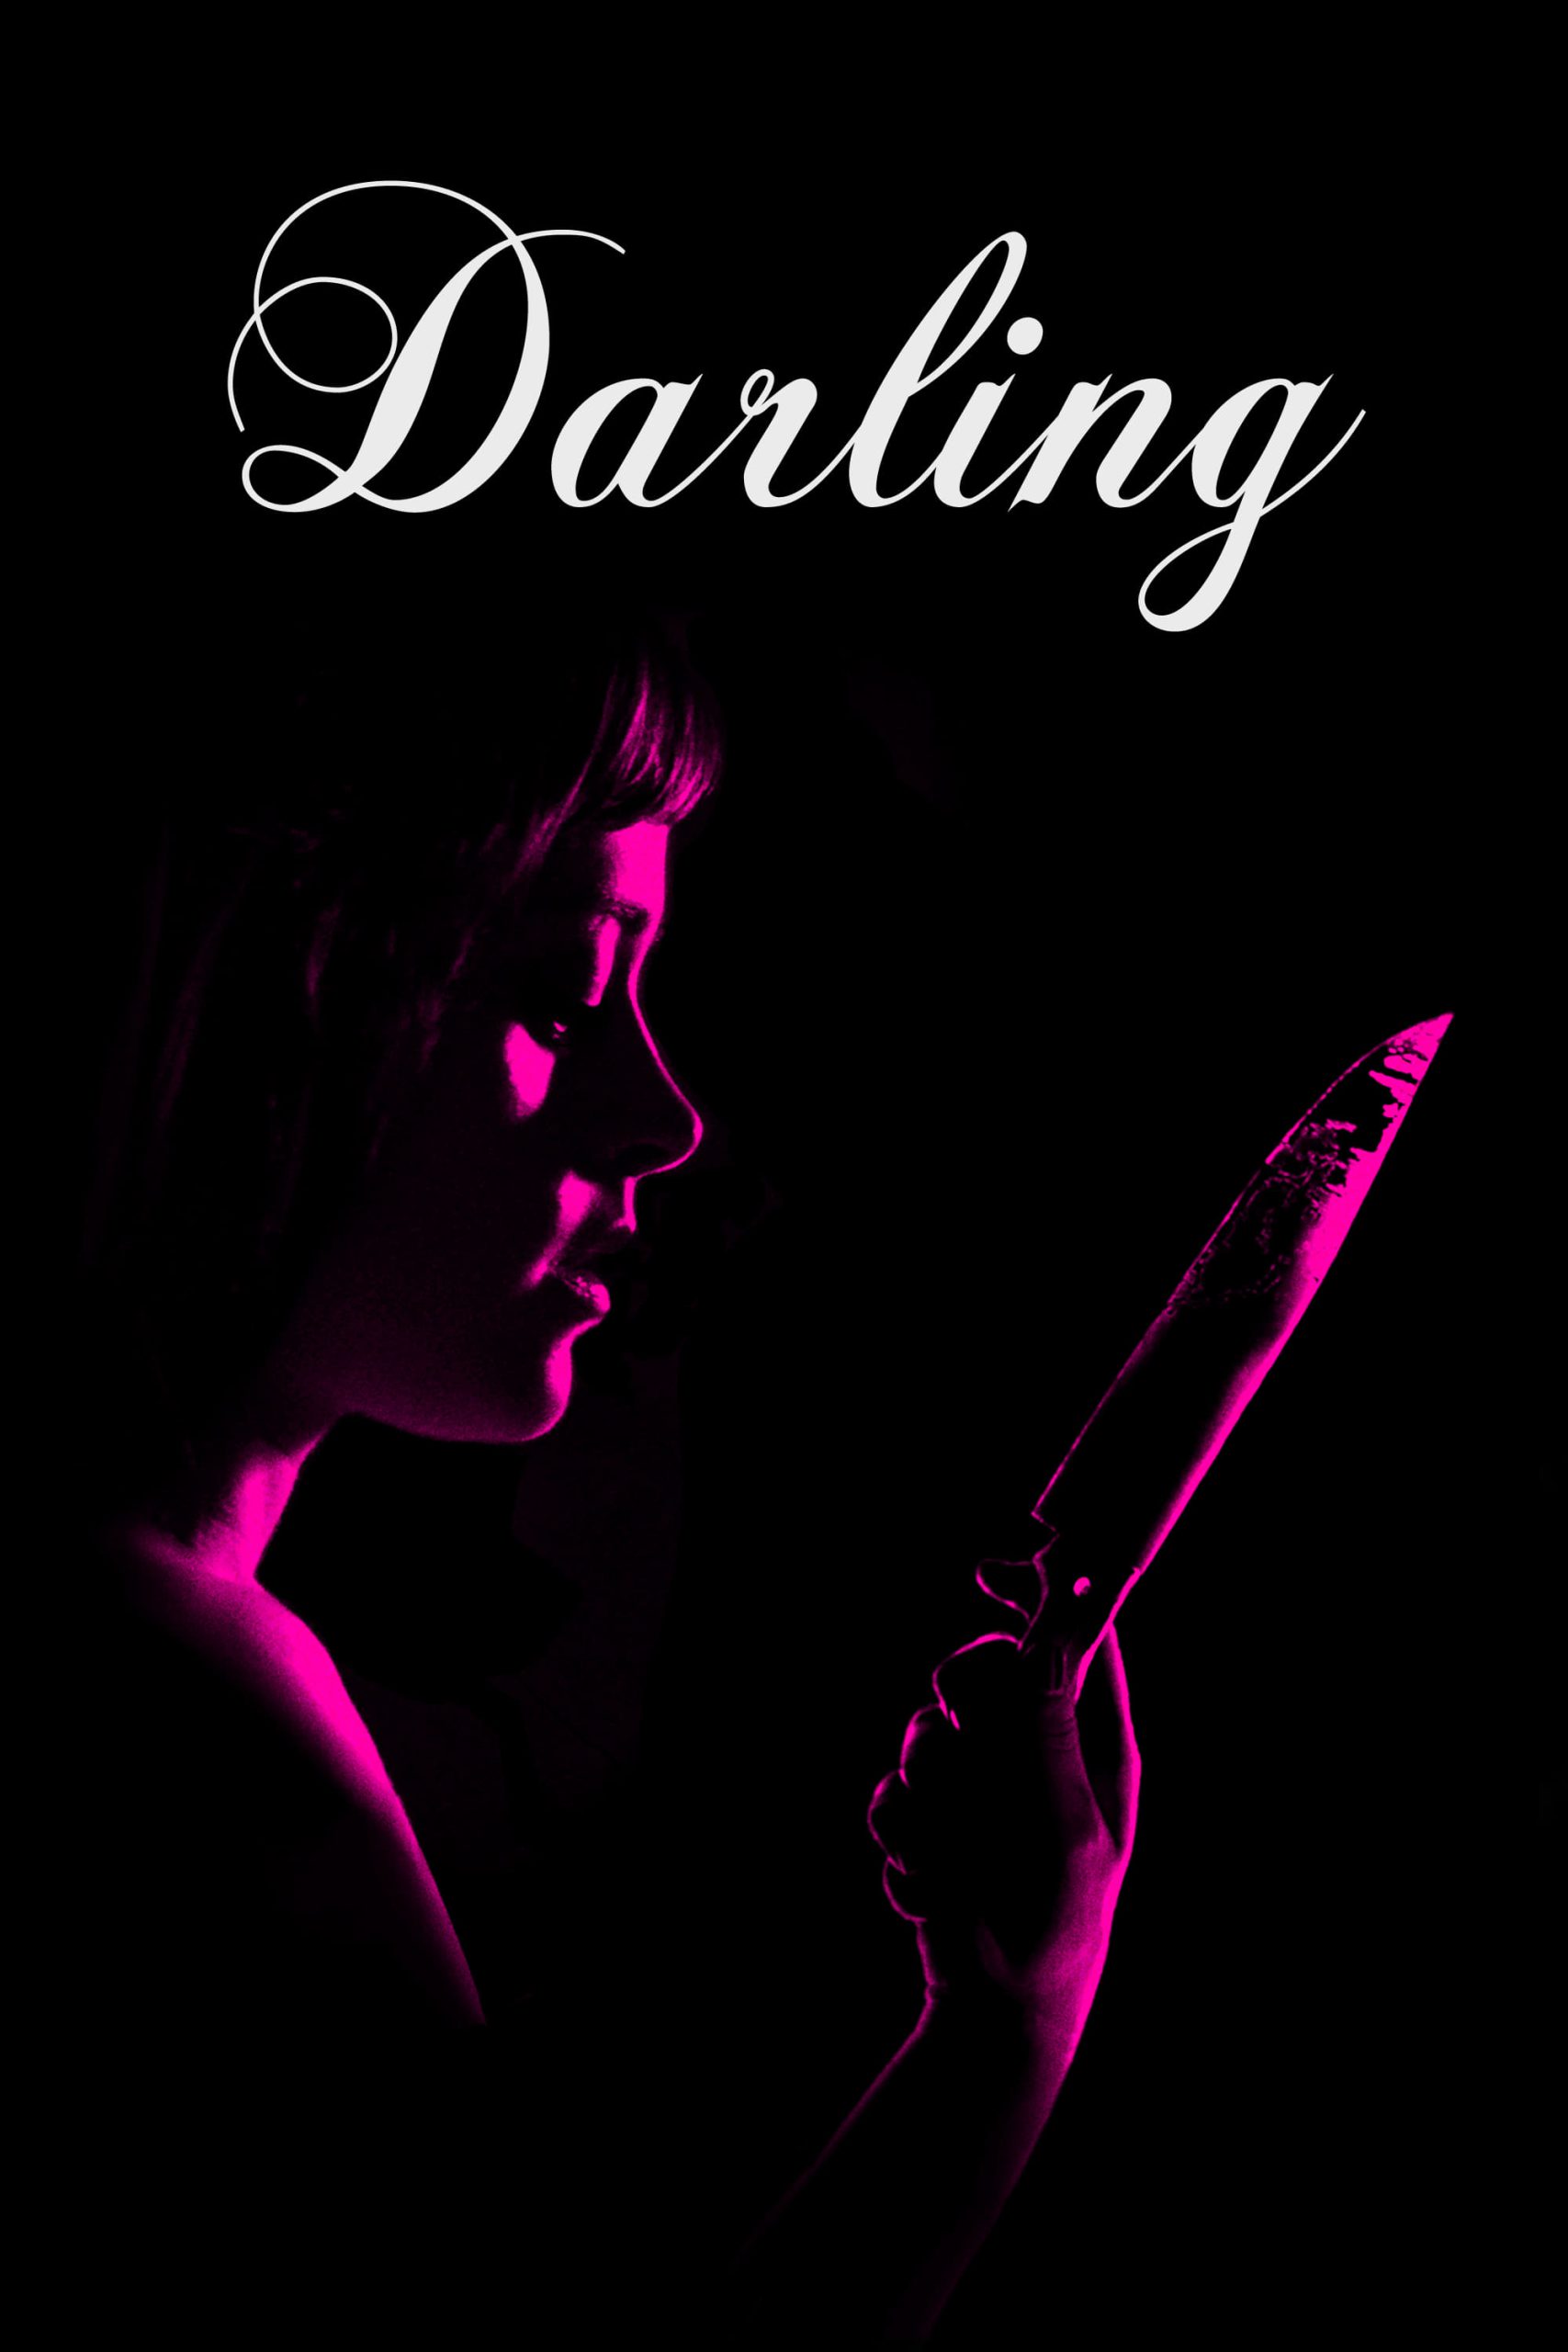 Darling [B/N] [Sub-ITA] (2015)